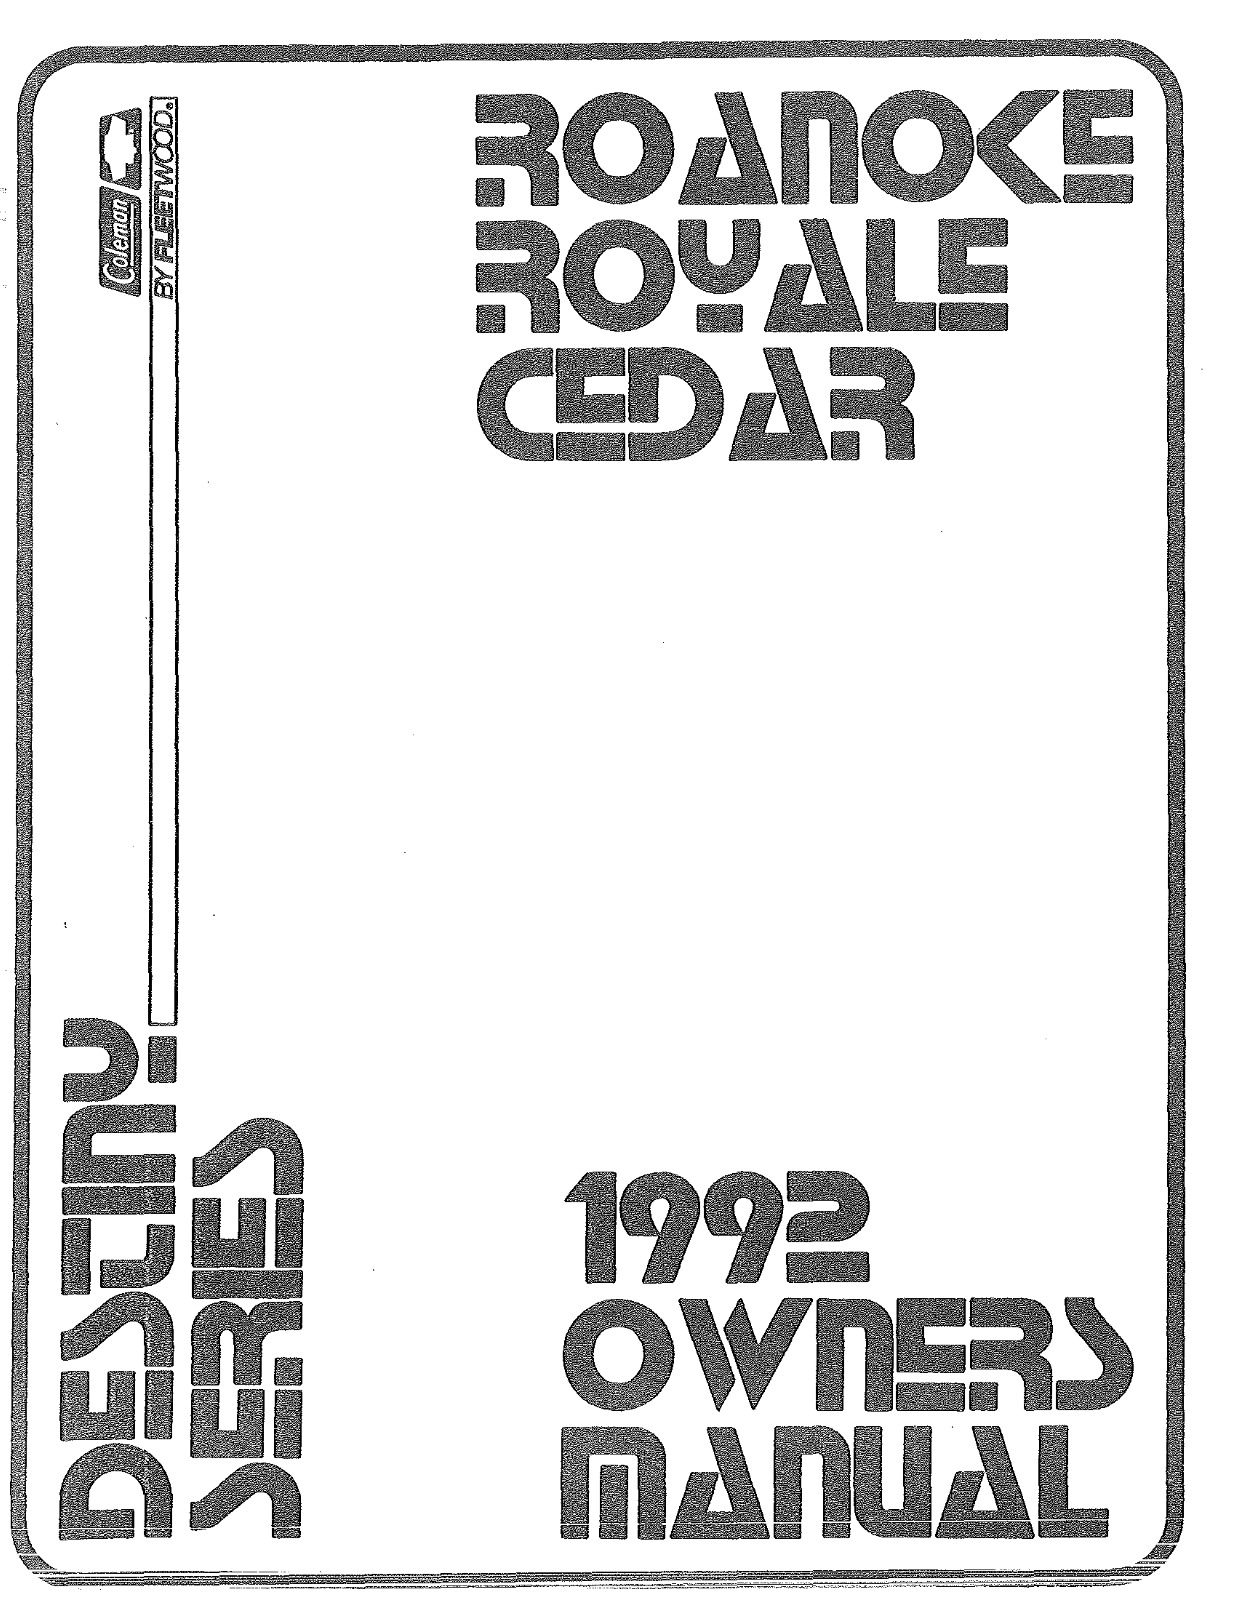 1992 COLEMAN Destiny Roanoke Royale Cedar Trailer Owners Manual Coil Bound